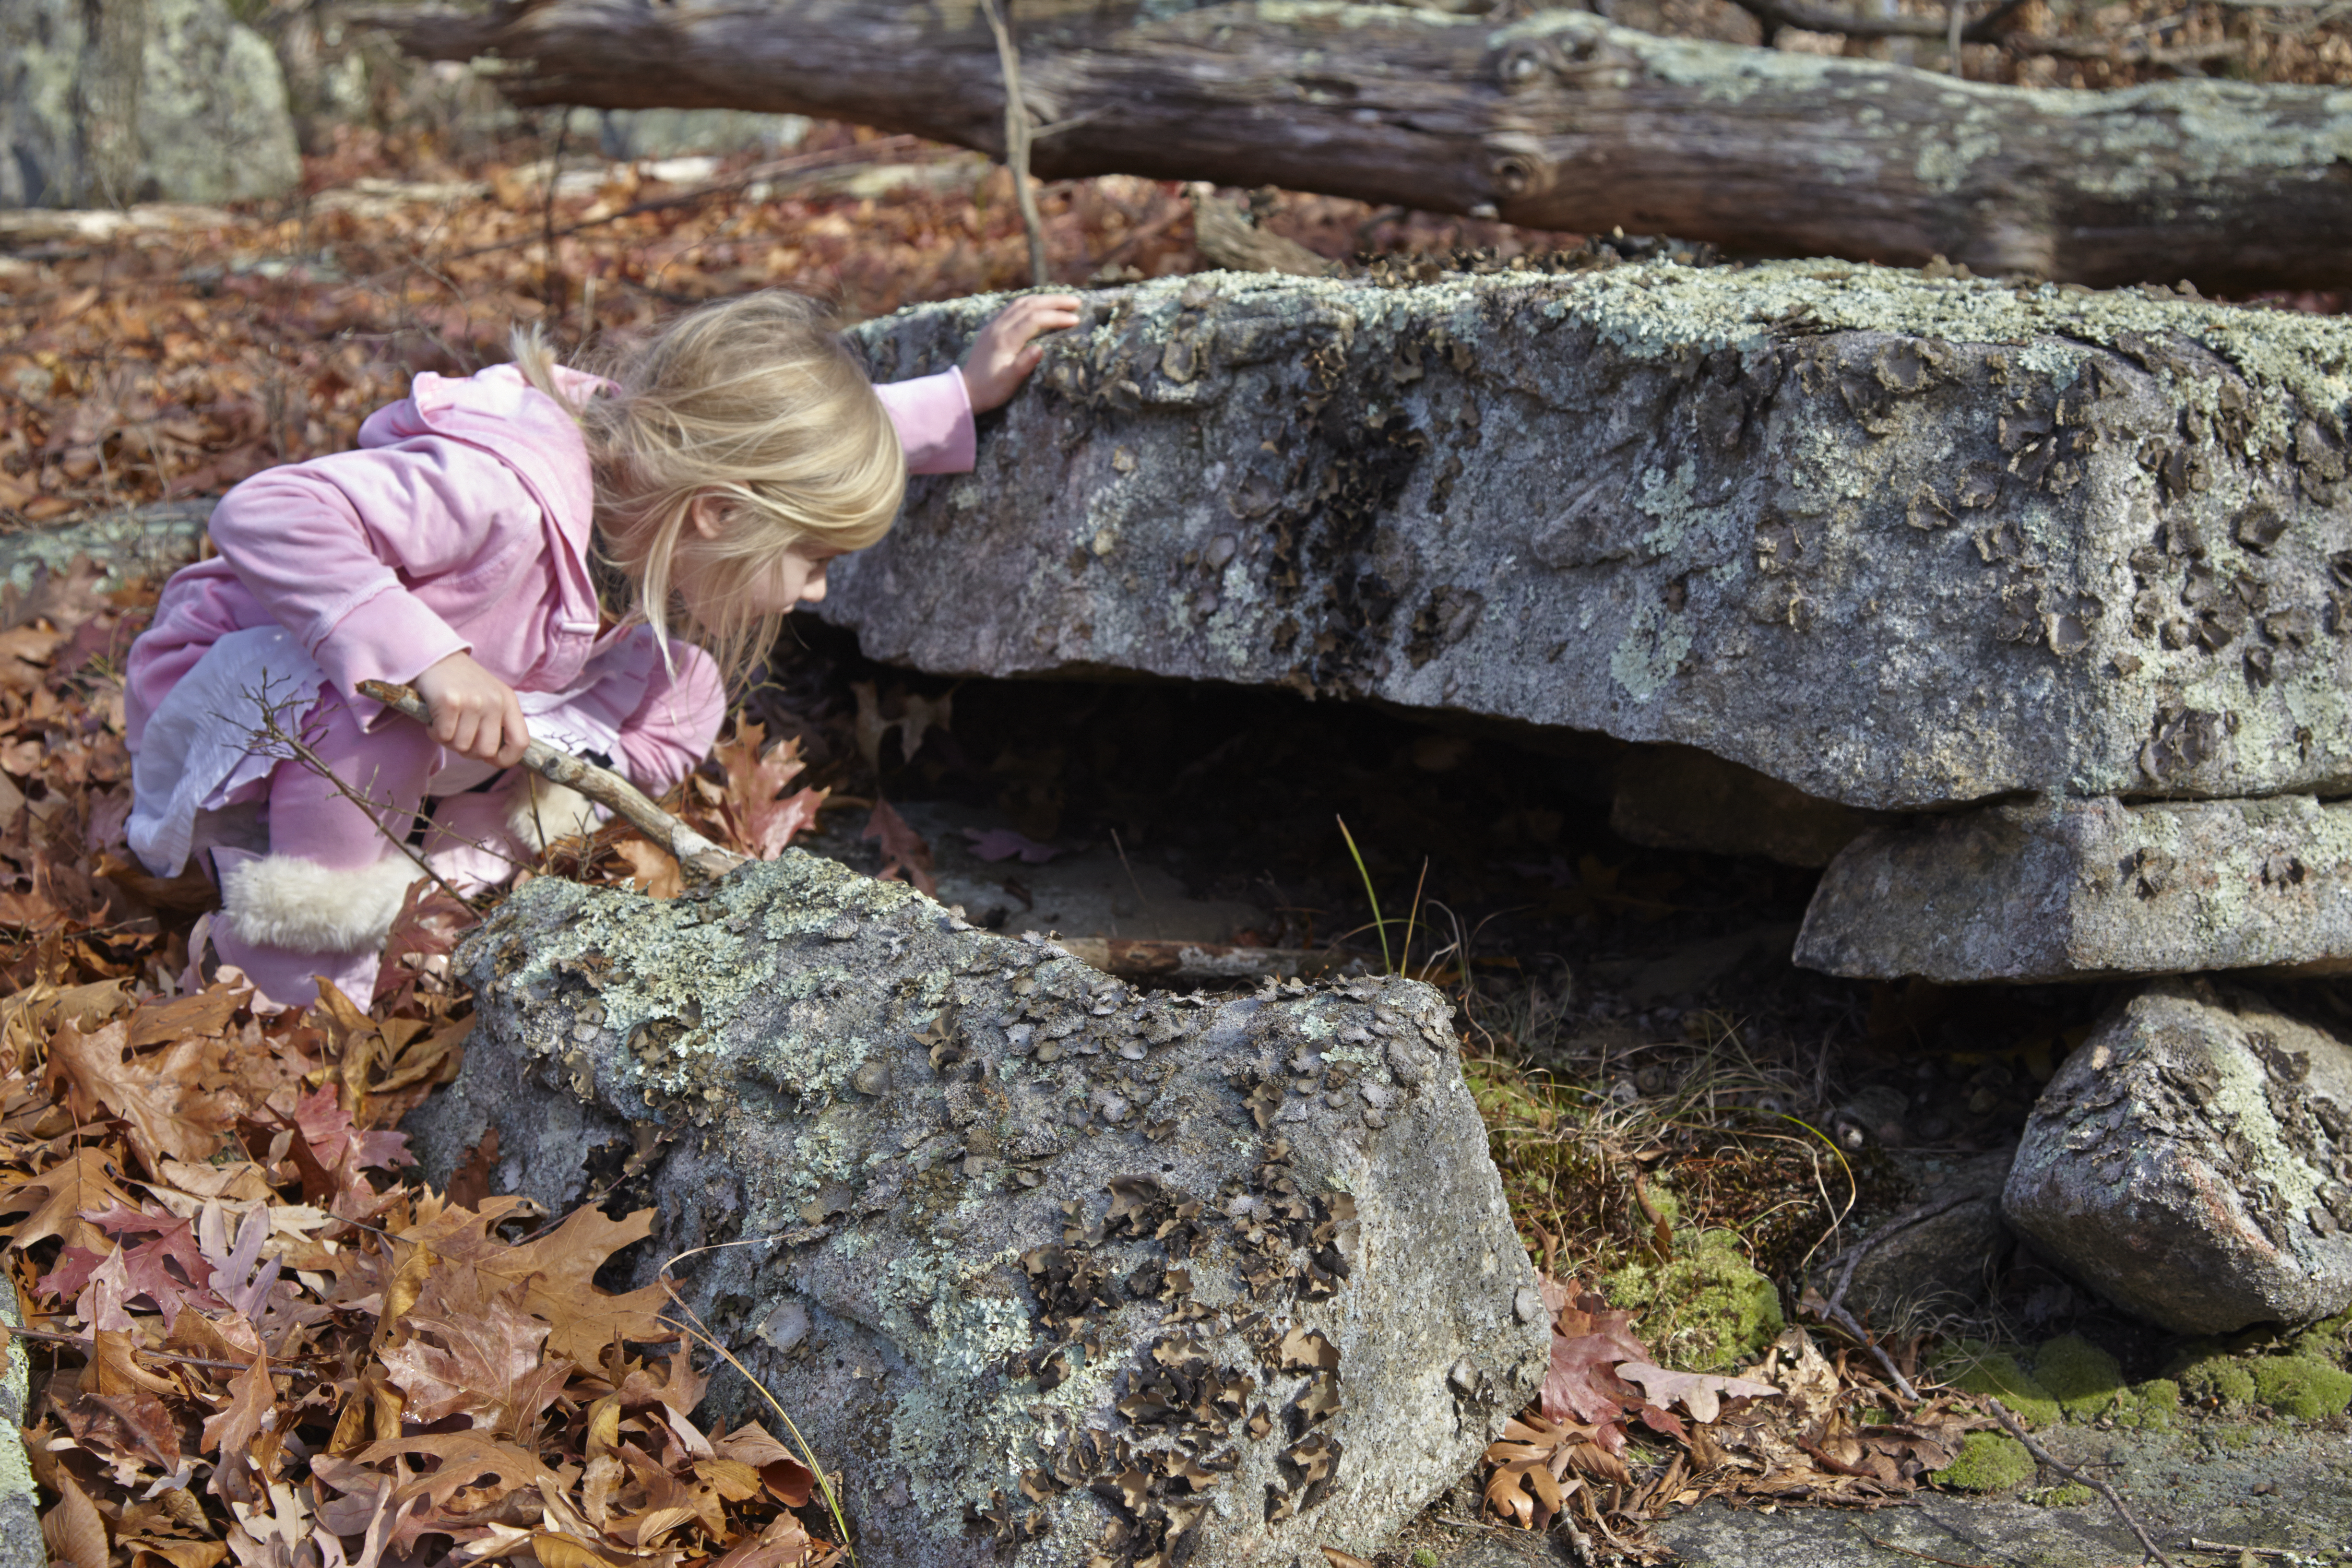 A child exploring The Preserve. Photo credit Bob Lorenz.